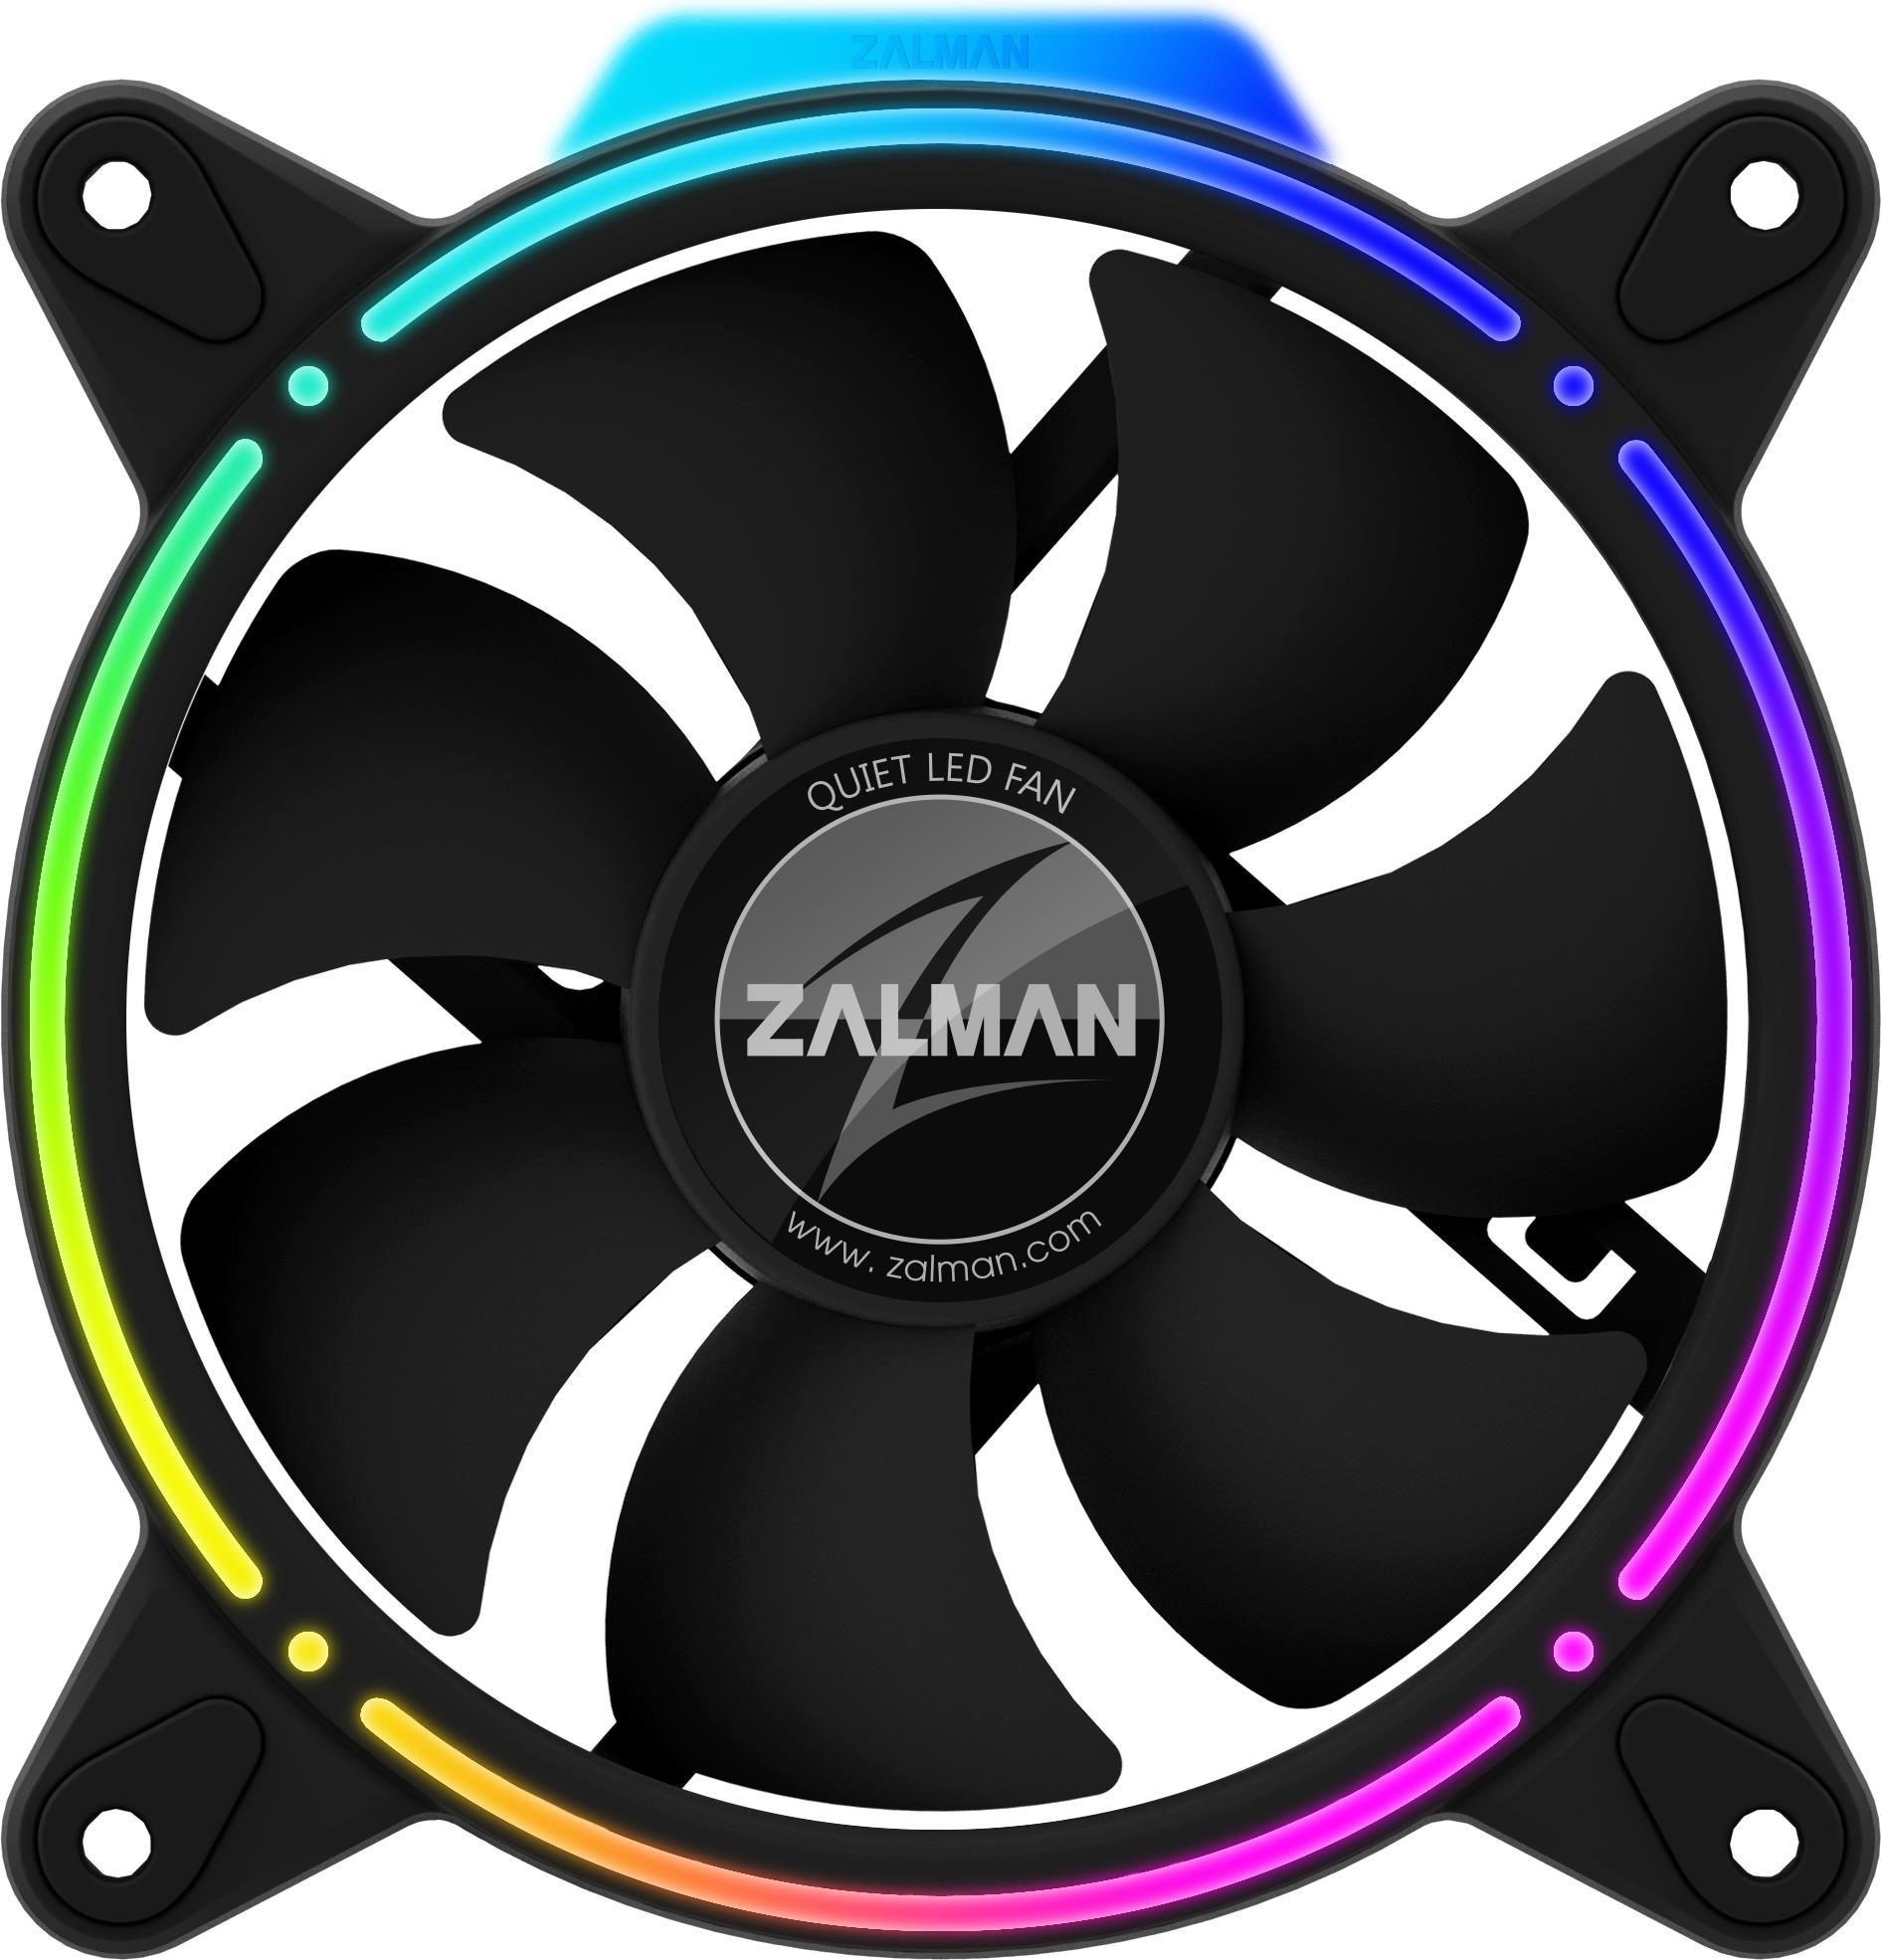 Корпусный вентилятор купить. Вентилятор для корпуса Zalman ZM-rfd120a. Кулер для корпуса 120 мм RGB Zalman. Zalman кулеры 120мм в корпус. Кулер Залман 120 мм с подсветкой.